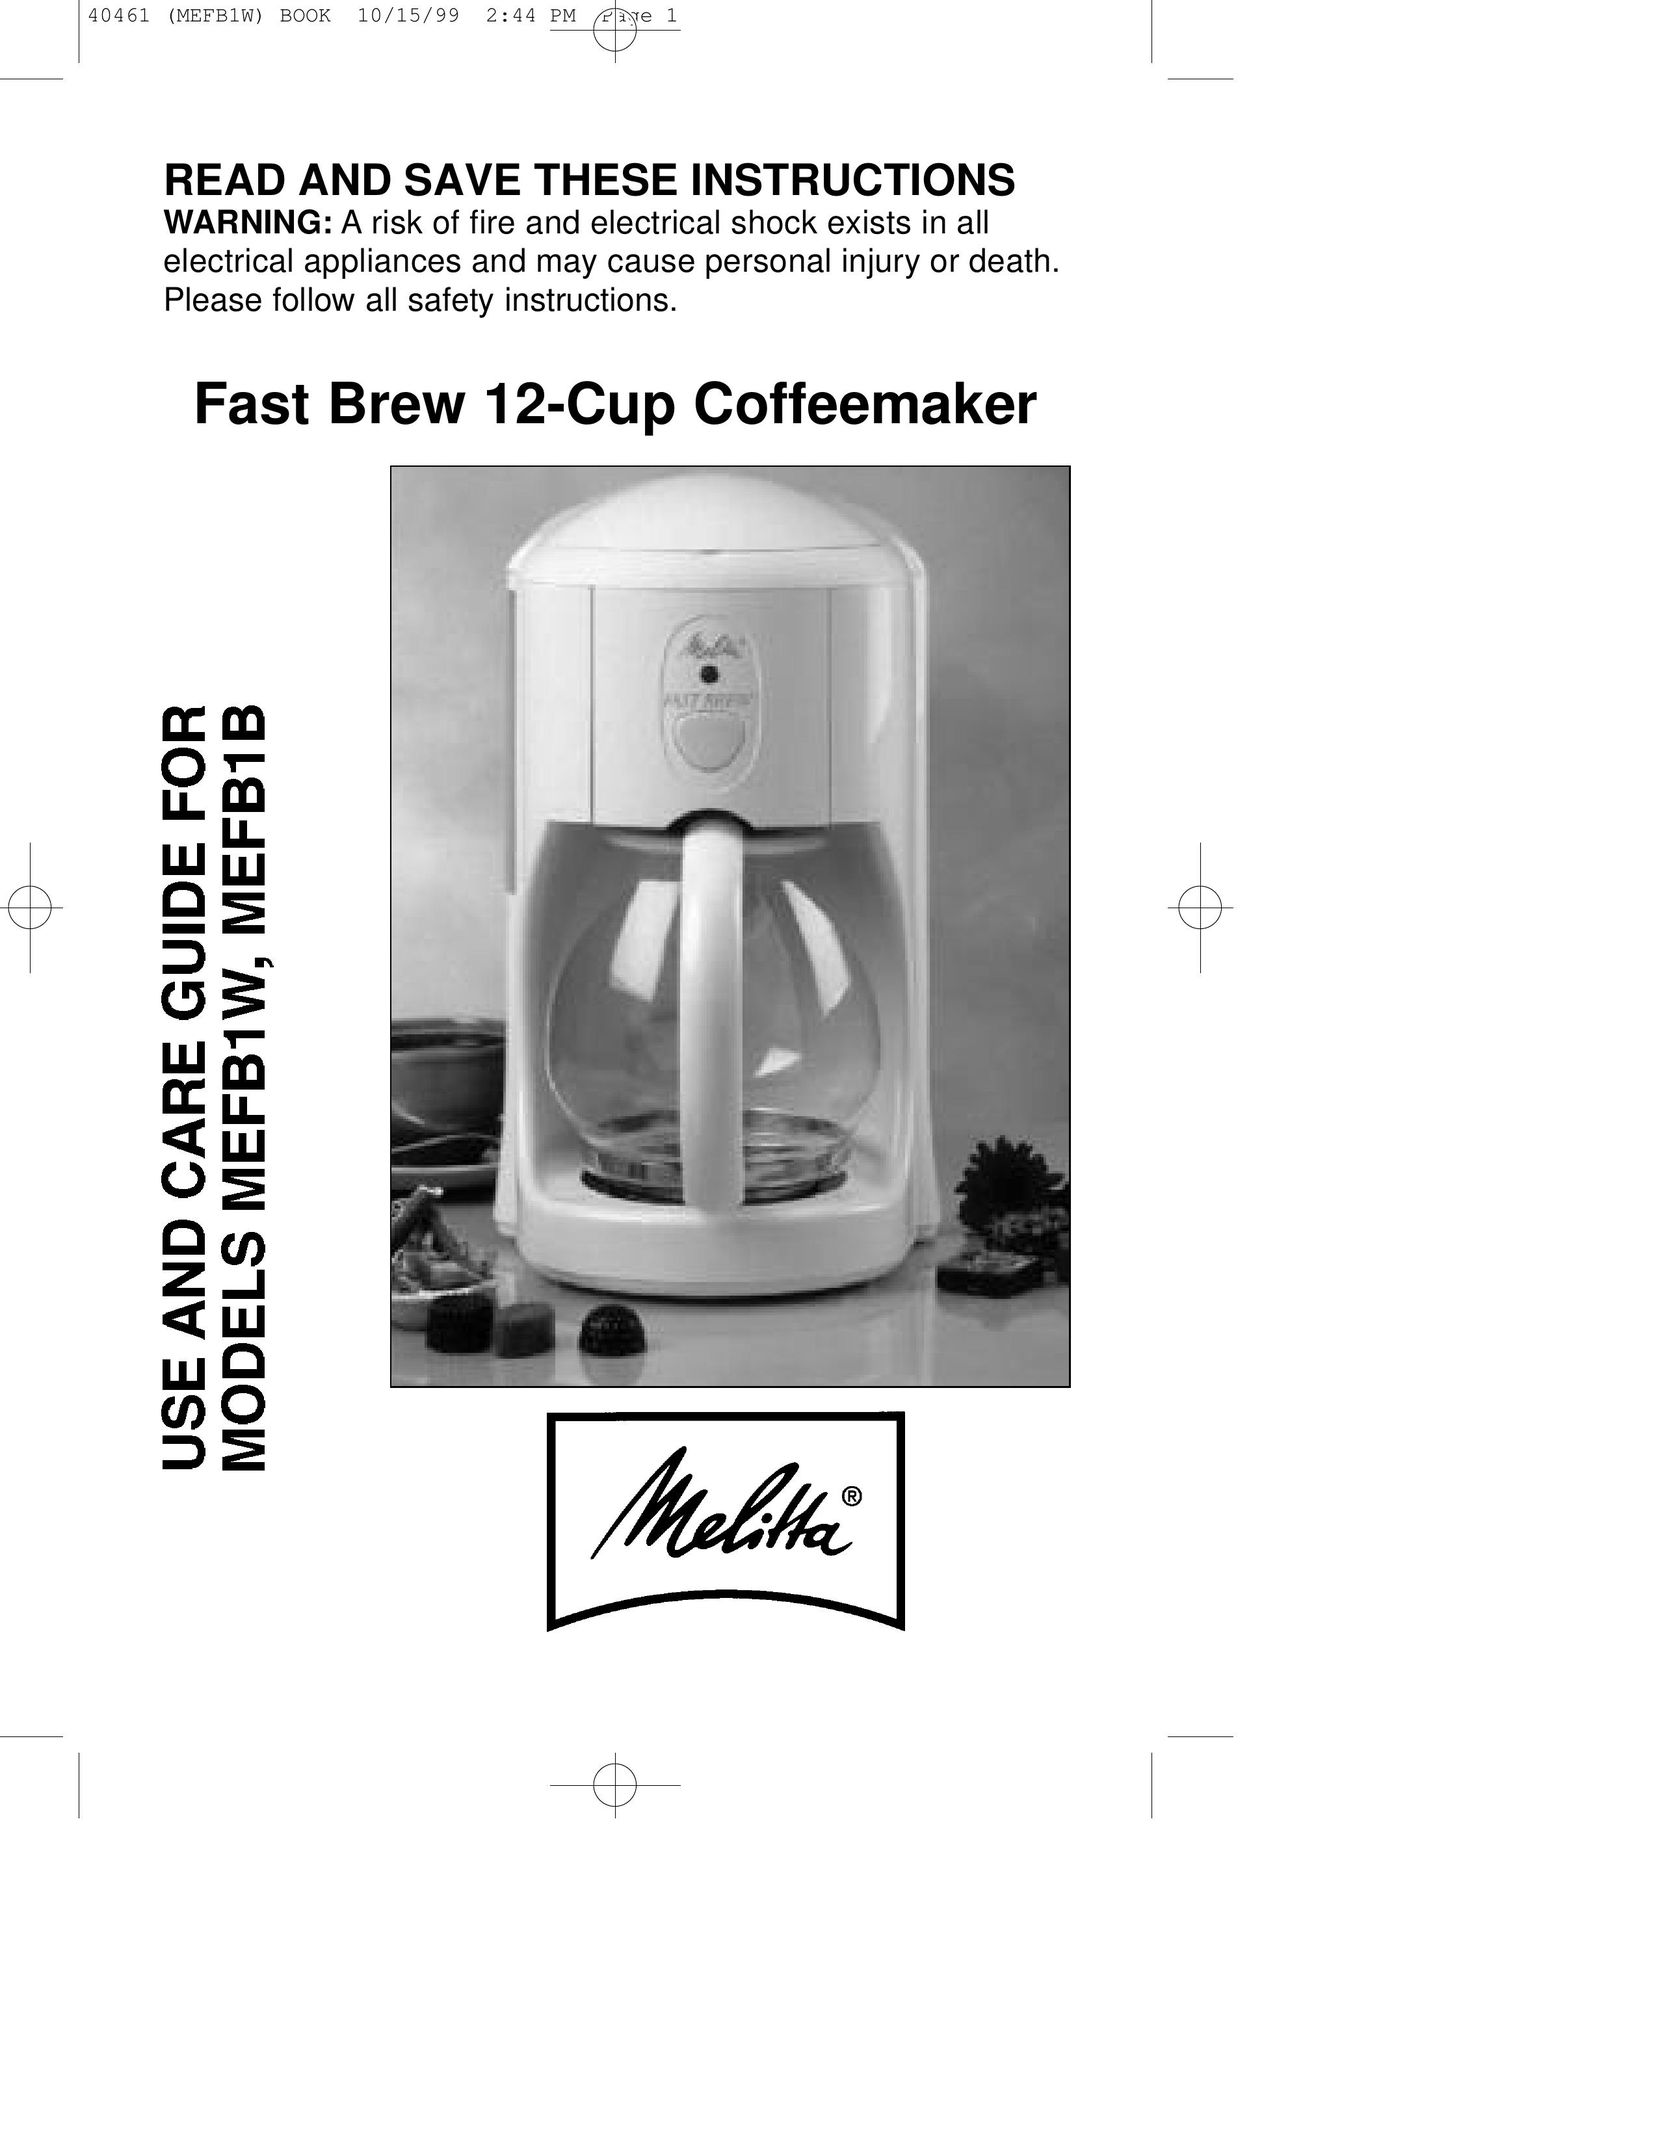 Salton MEFB1W Coffeemaker User Manual